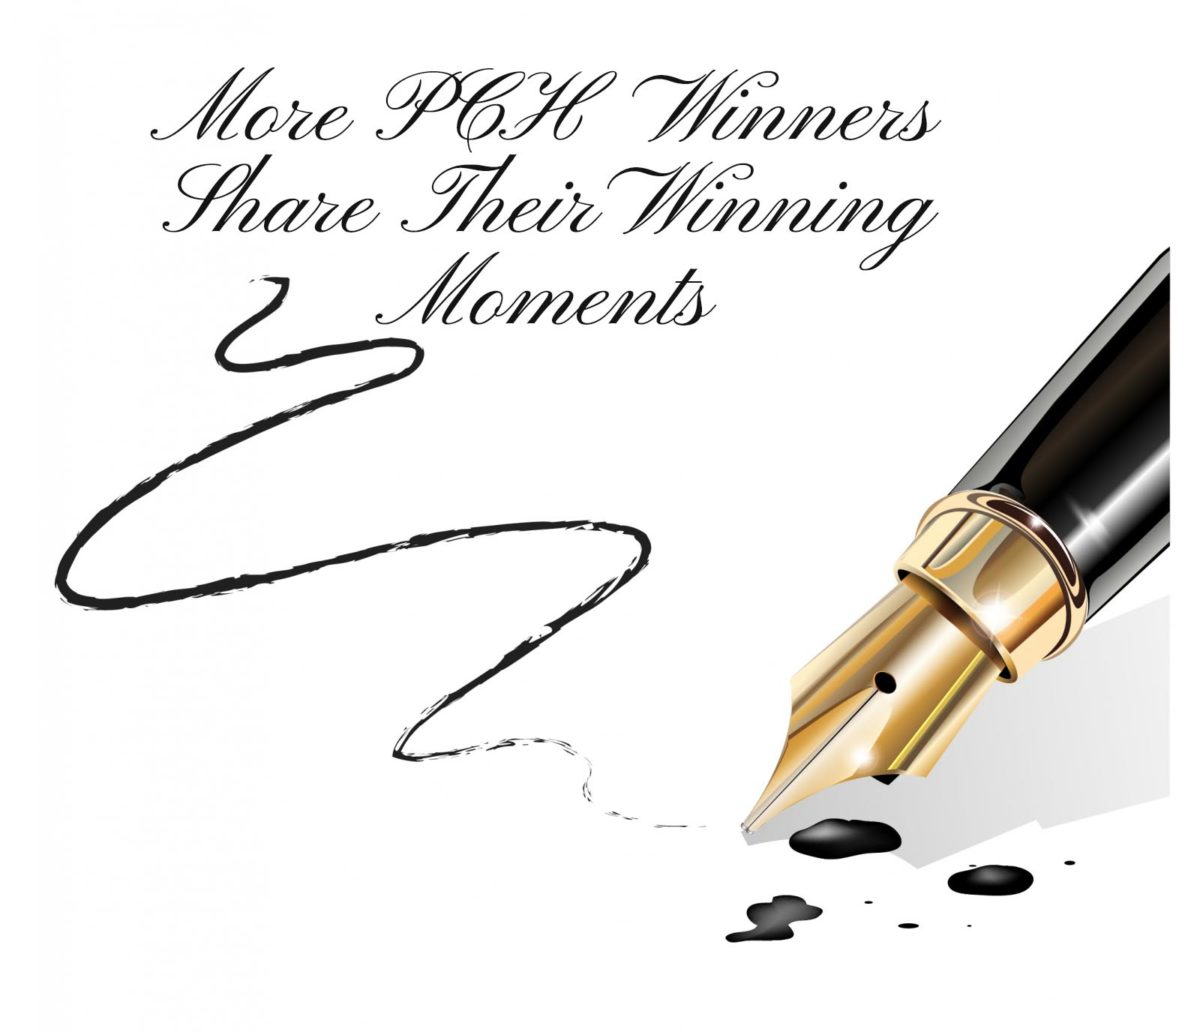 #WinnerWednesday: More PCH Winners Share Their Winning Moments!